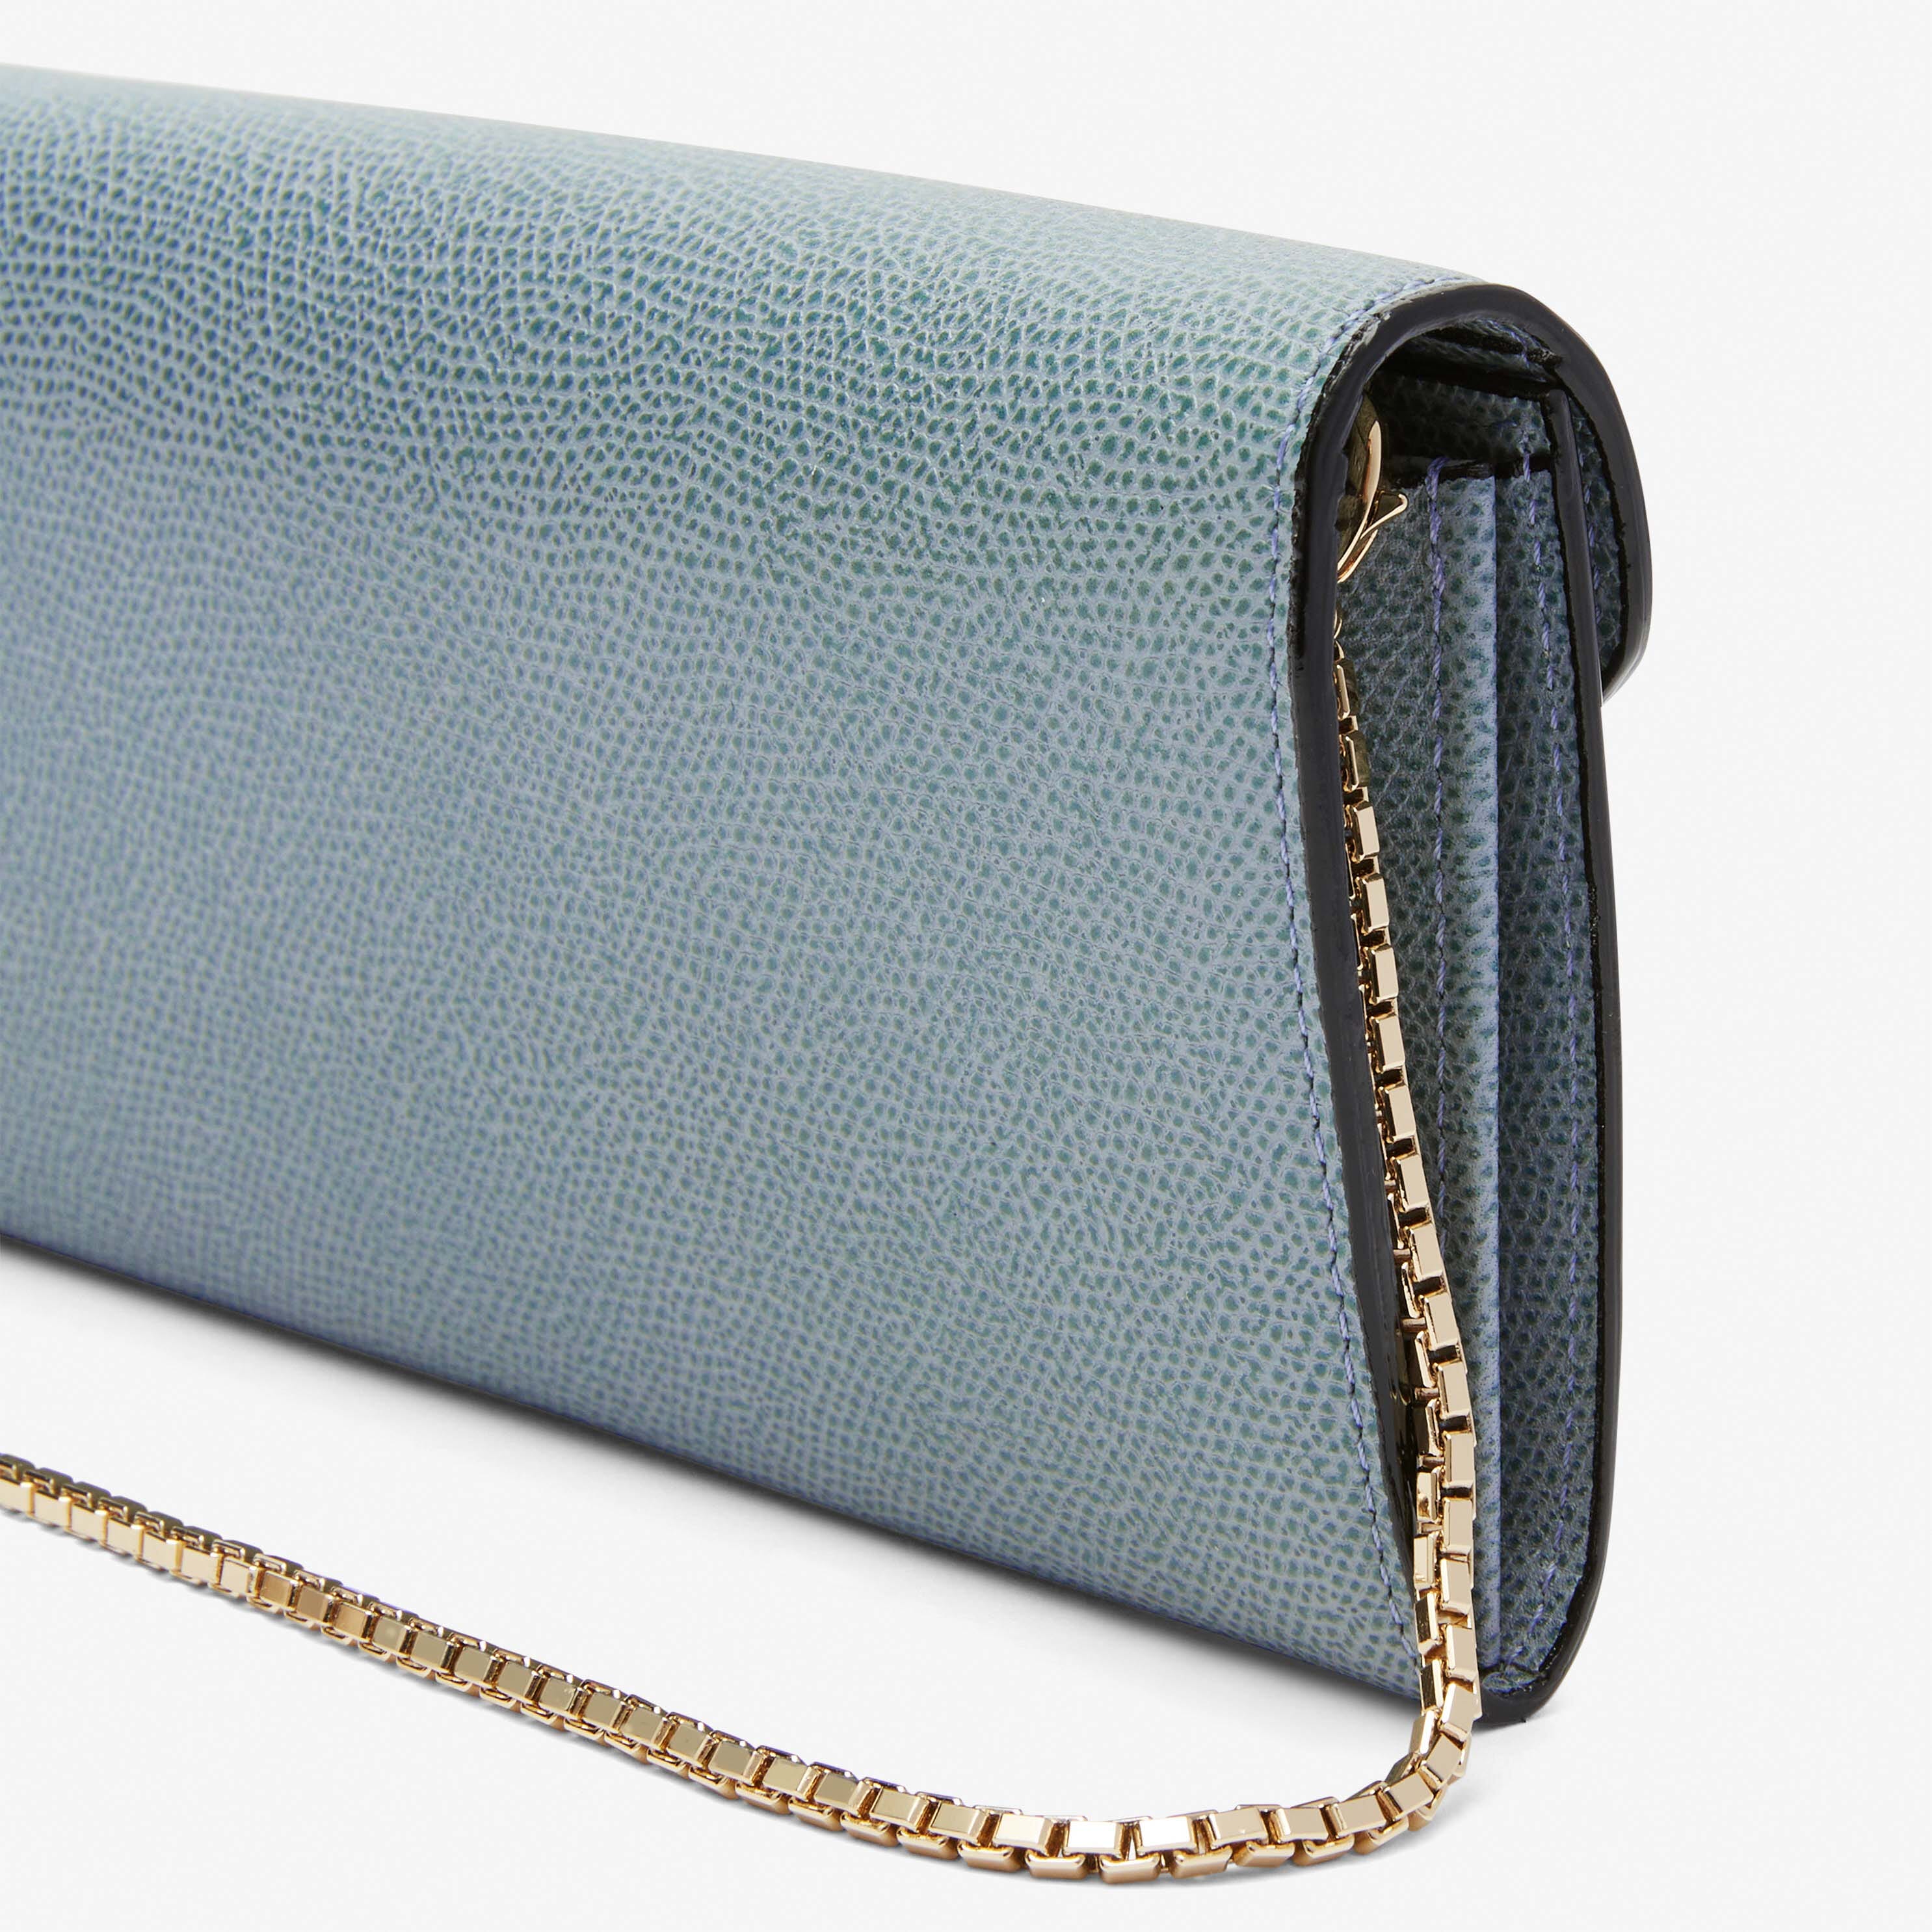 Iside continental purse with chain - Smokey Blue - Vitello VS - Valextra - 4